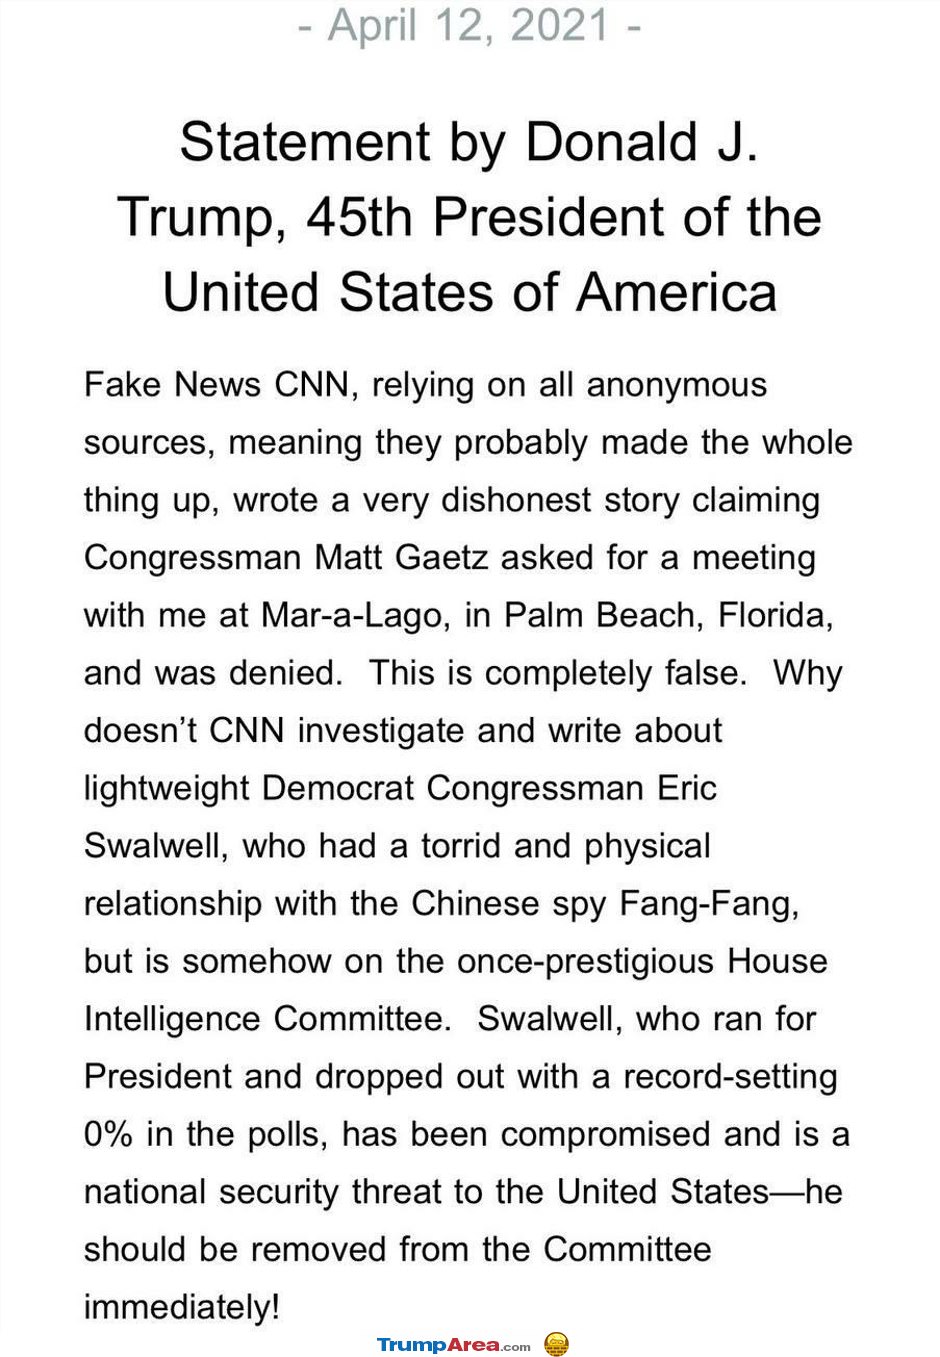 fake news CNN